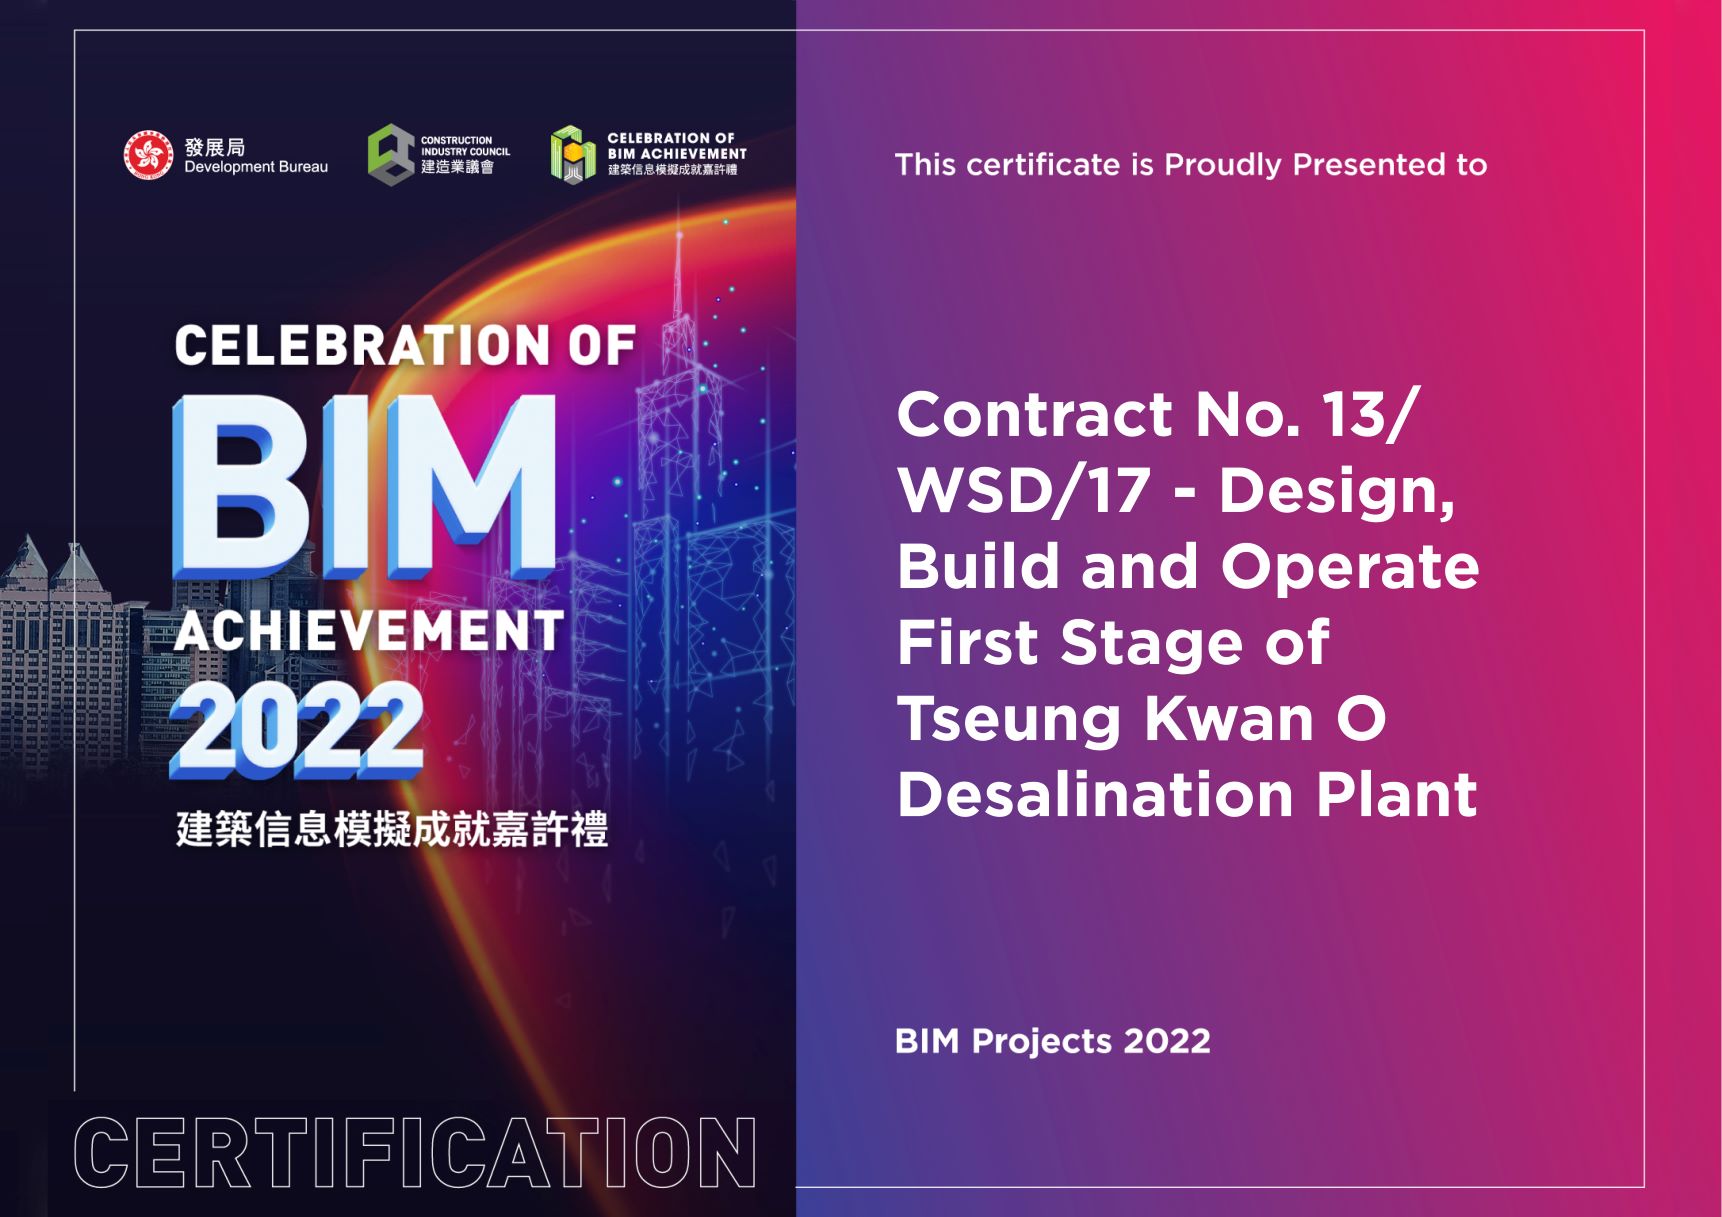 CIC BIM Achievement 2022